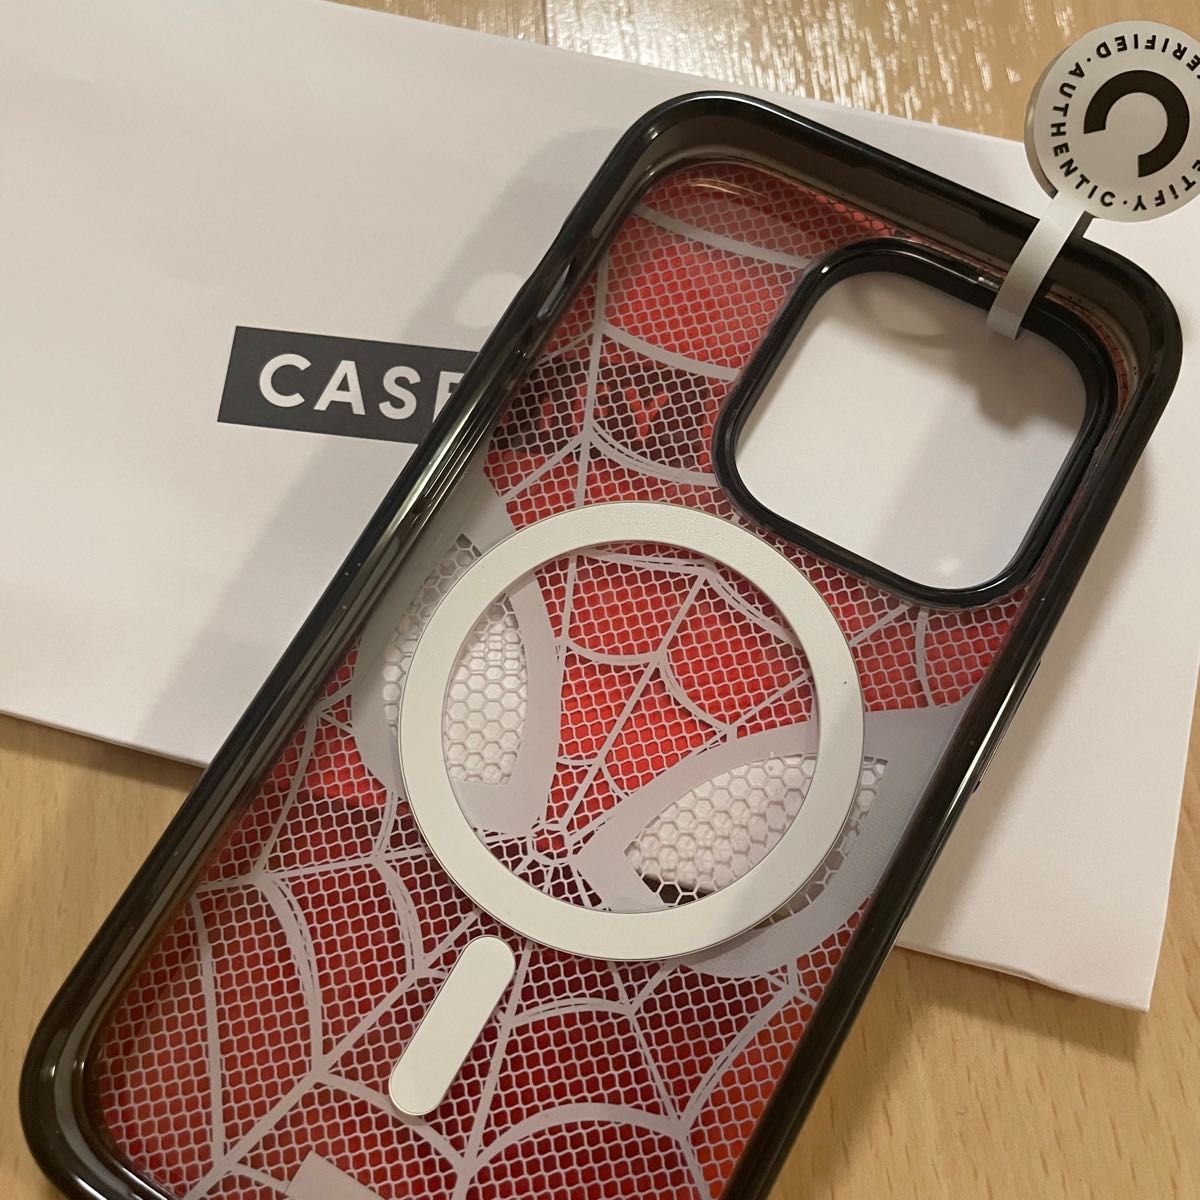 casetify スパイダーマン コラボ iphone15pro